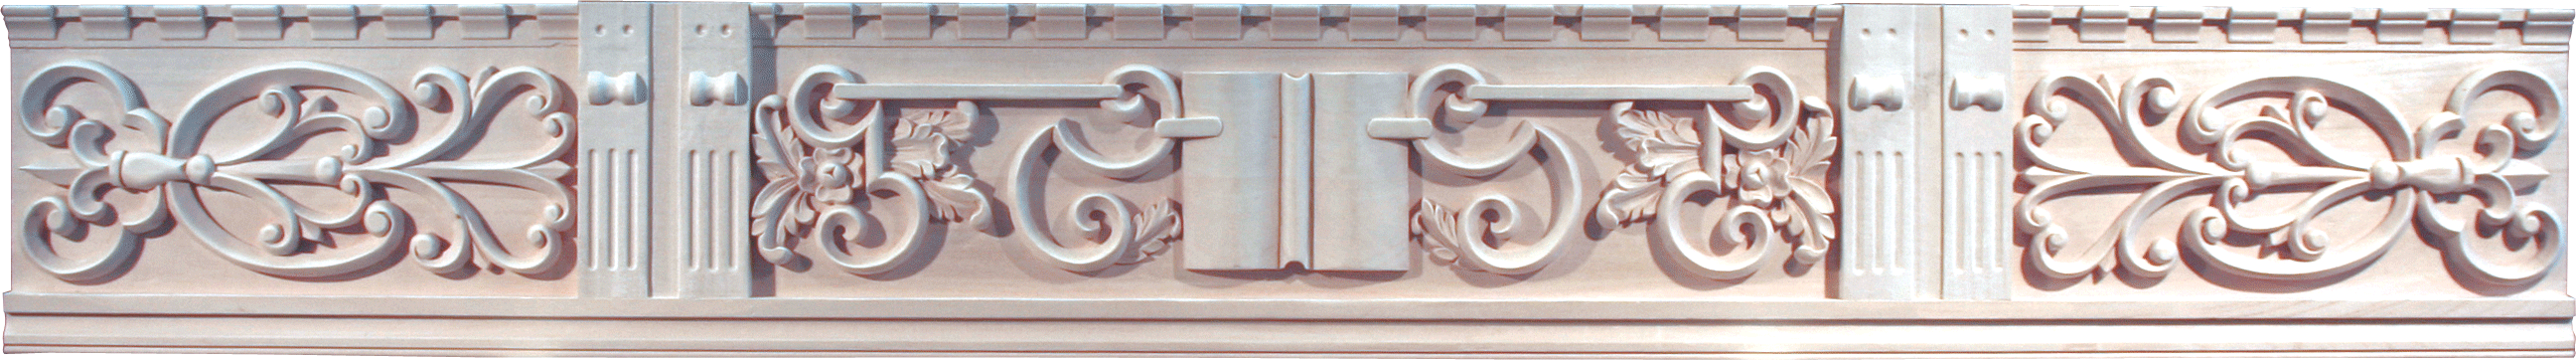 Panel Carvings W1160